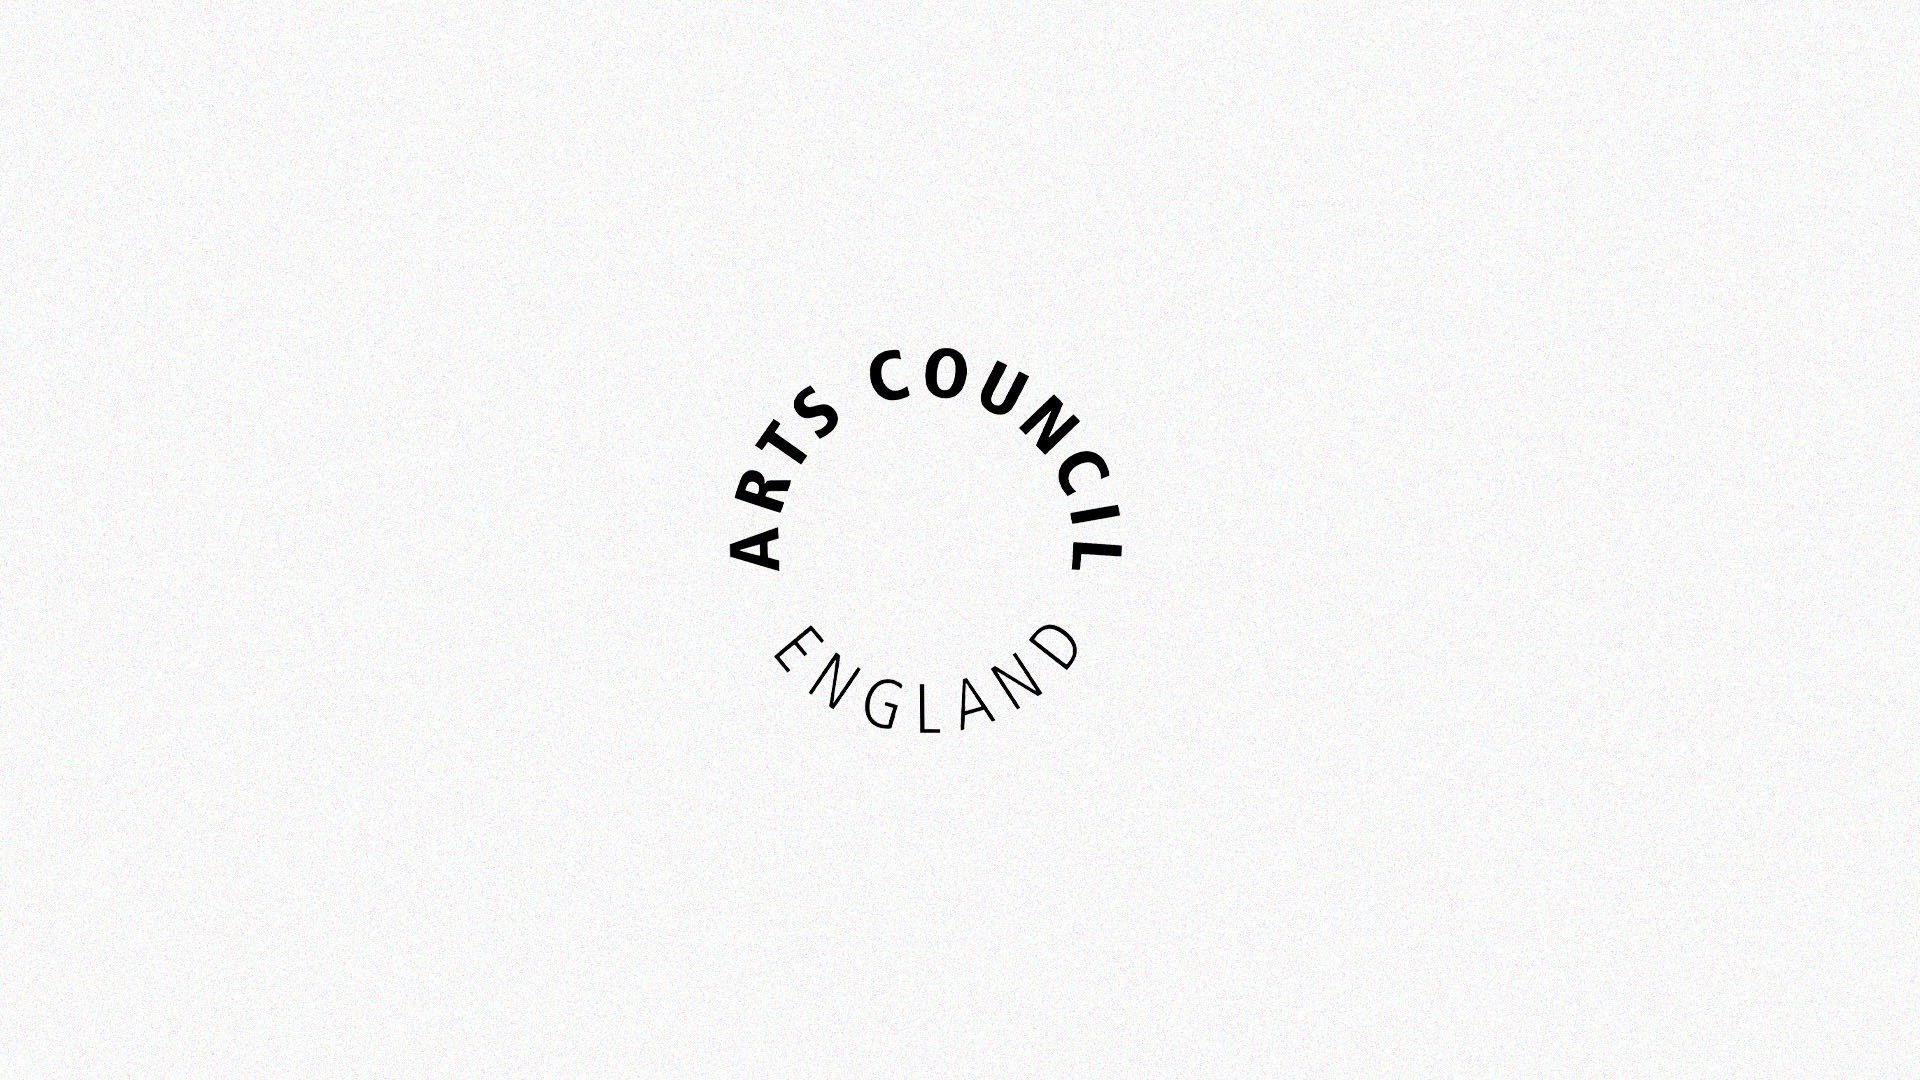 DJ Mag awarded Arts Council England grant